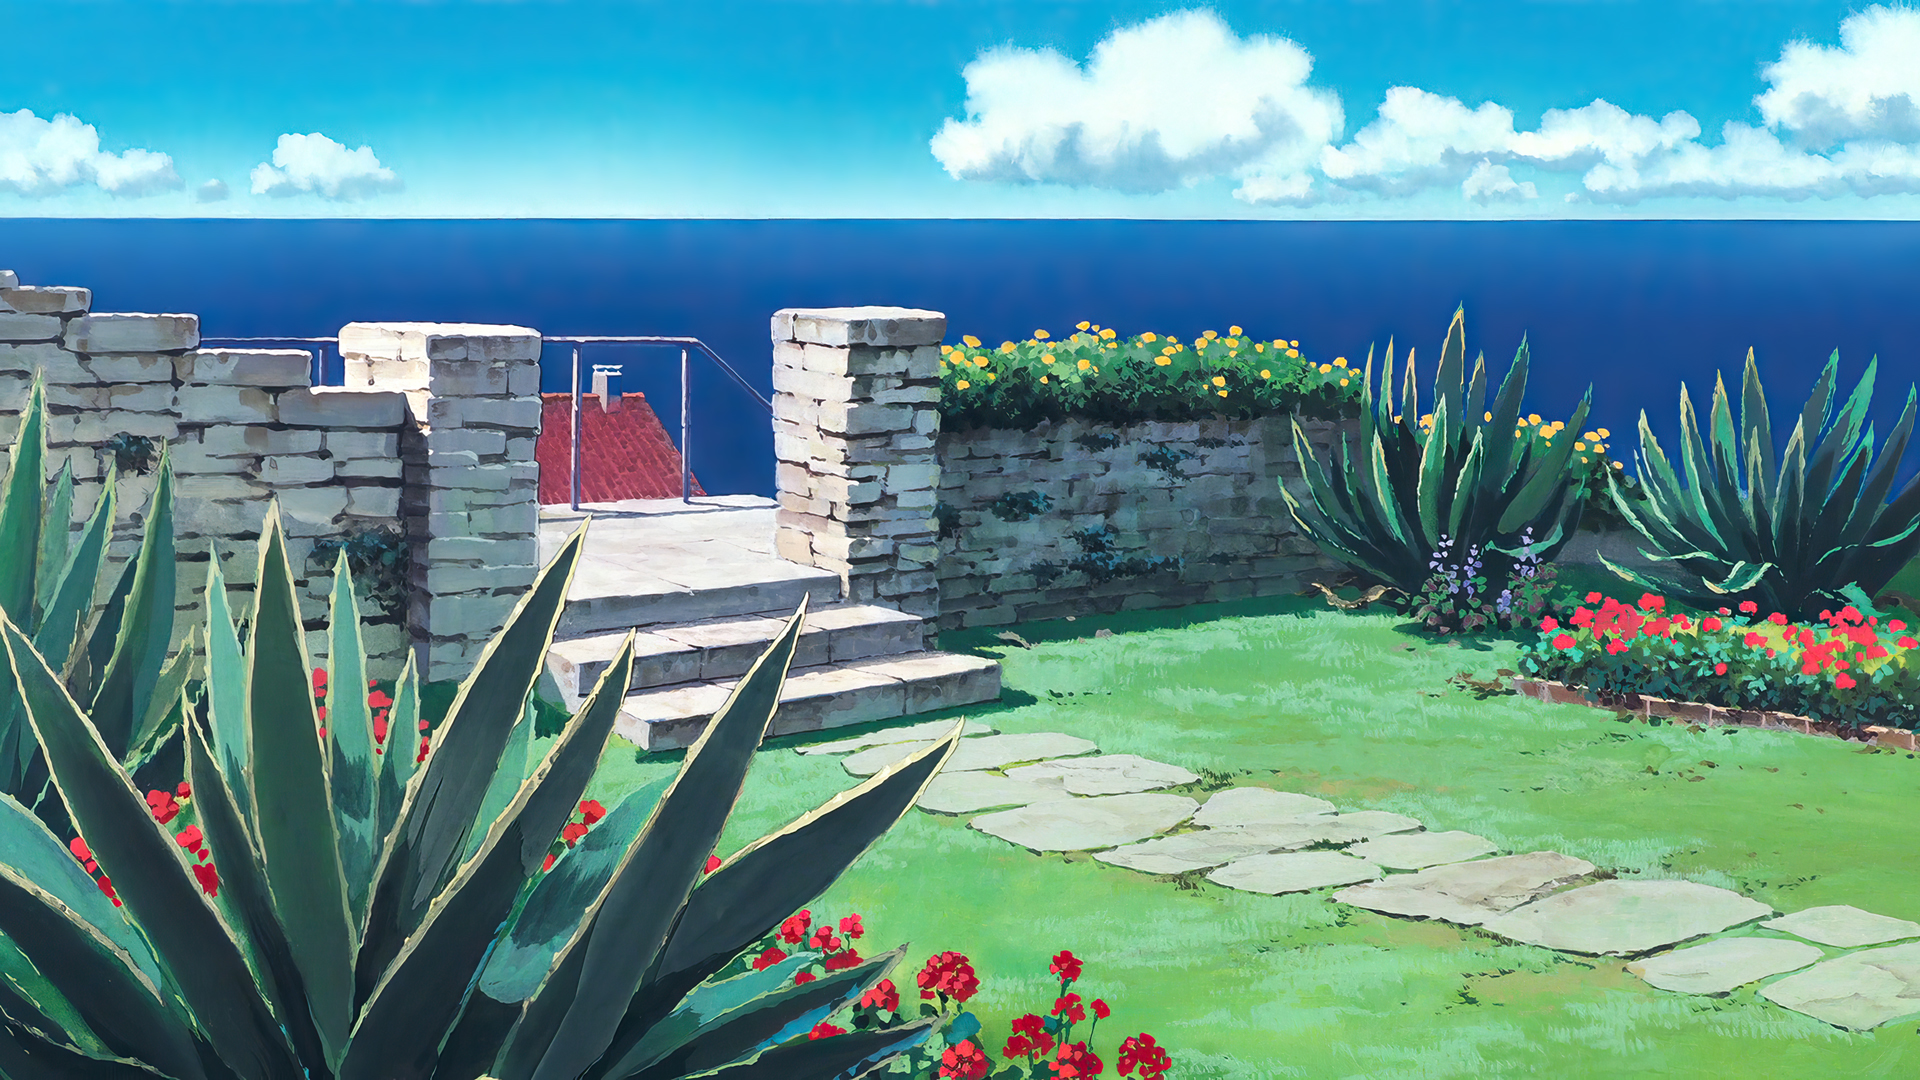 Anime 1920x1080 Kiki's Delivery Service animated movies anime animation film stills Studio Ghibli Hayao Miyazaki sky clouds water plants stairs flowers path stone fence